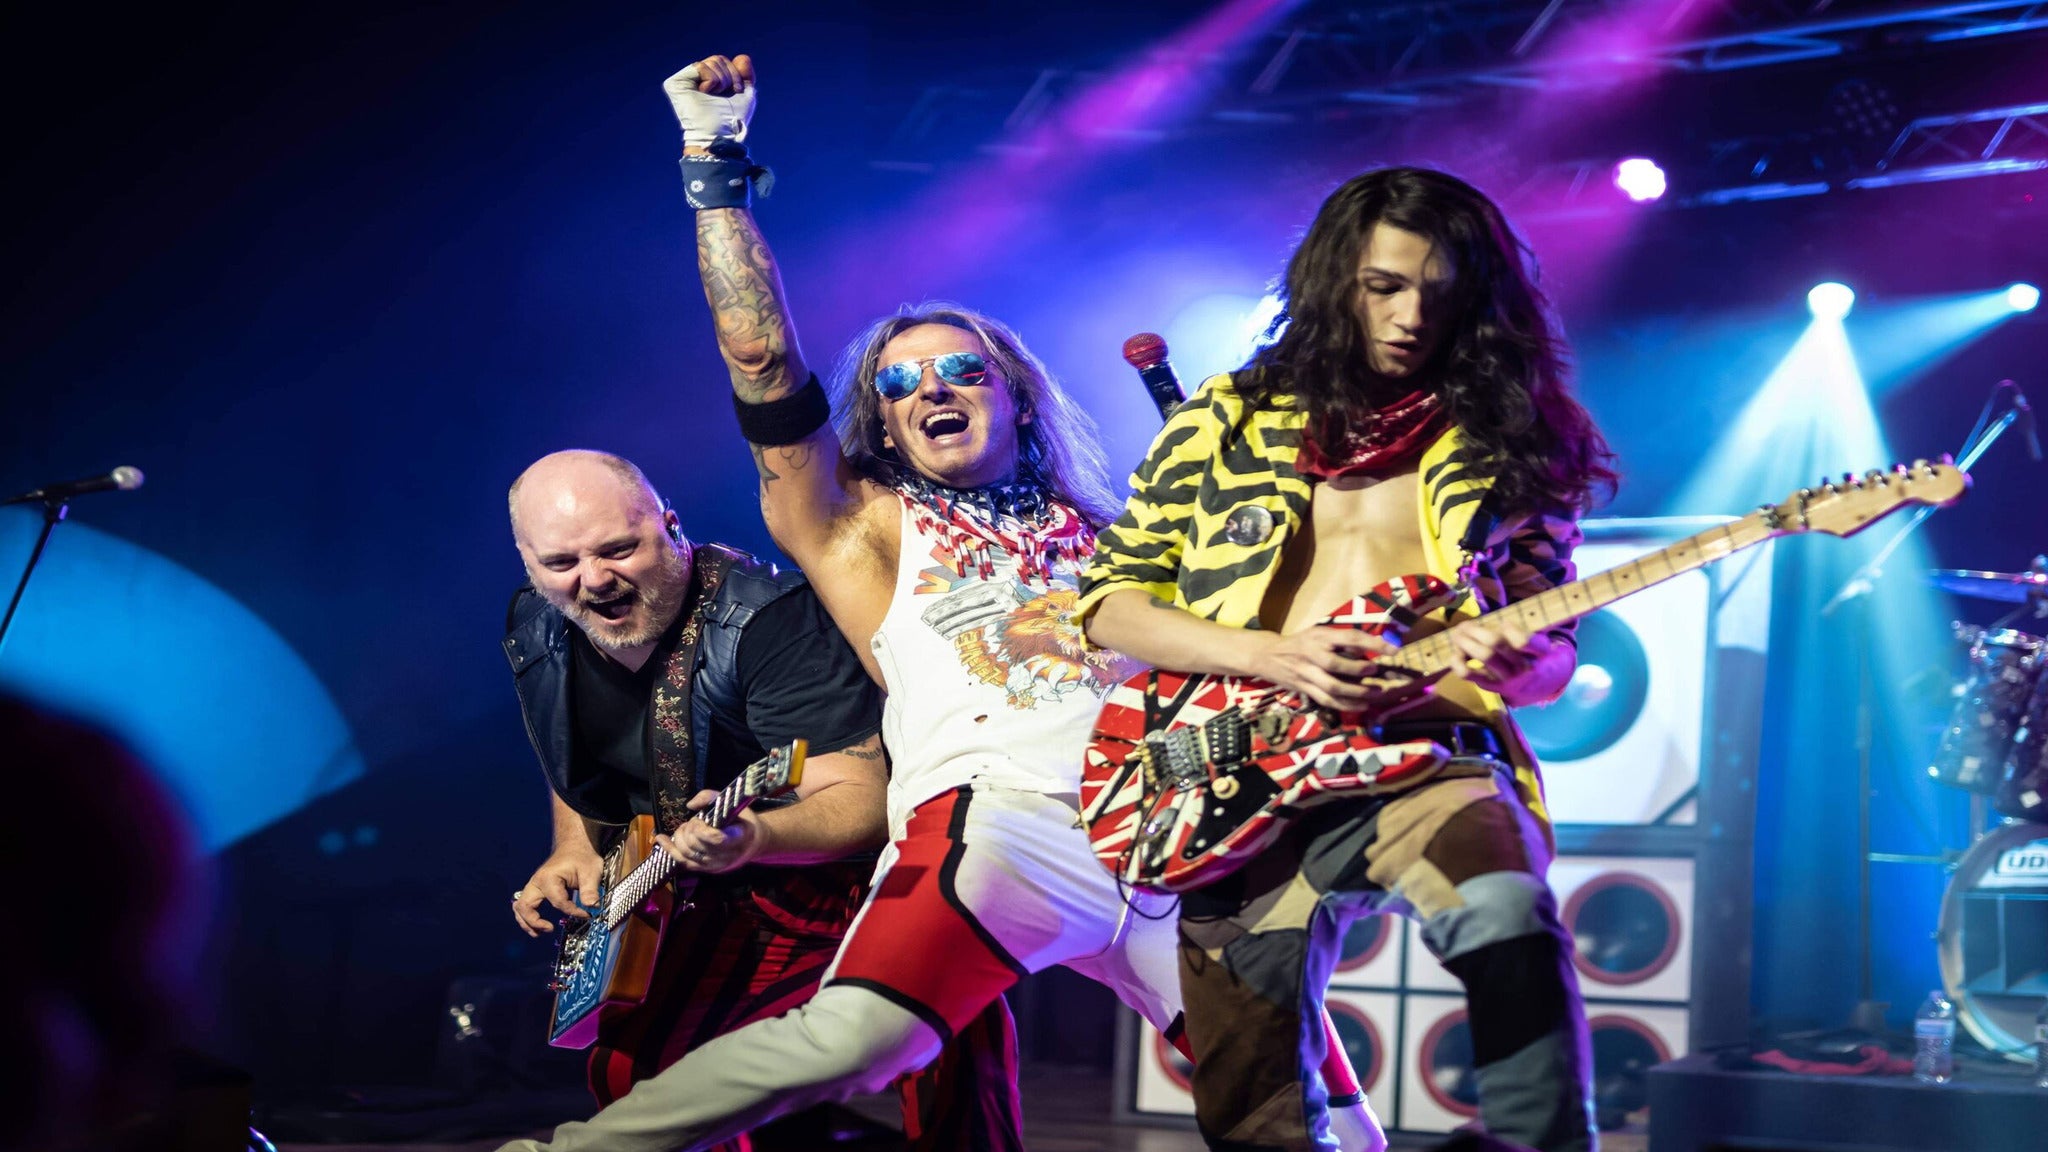 84 - Van Halen Tribute & Excitable - Def Leppard Tribute presale code for genuine tickets in Orlando